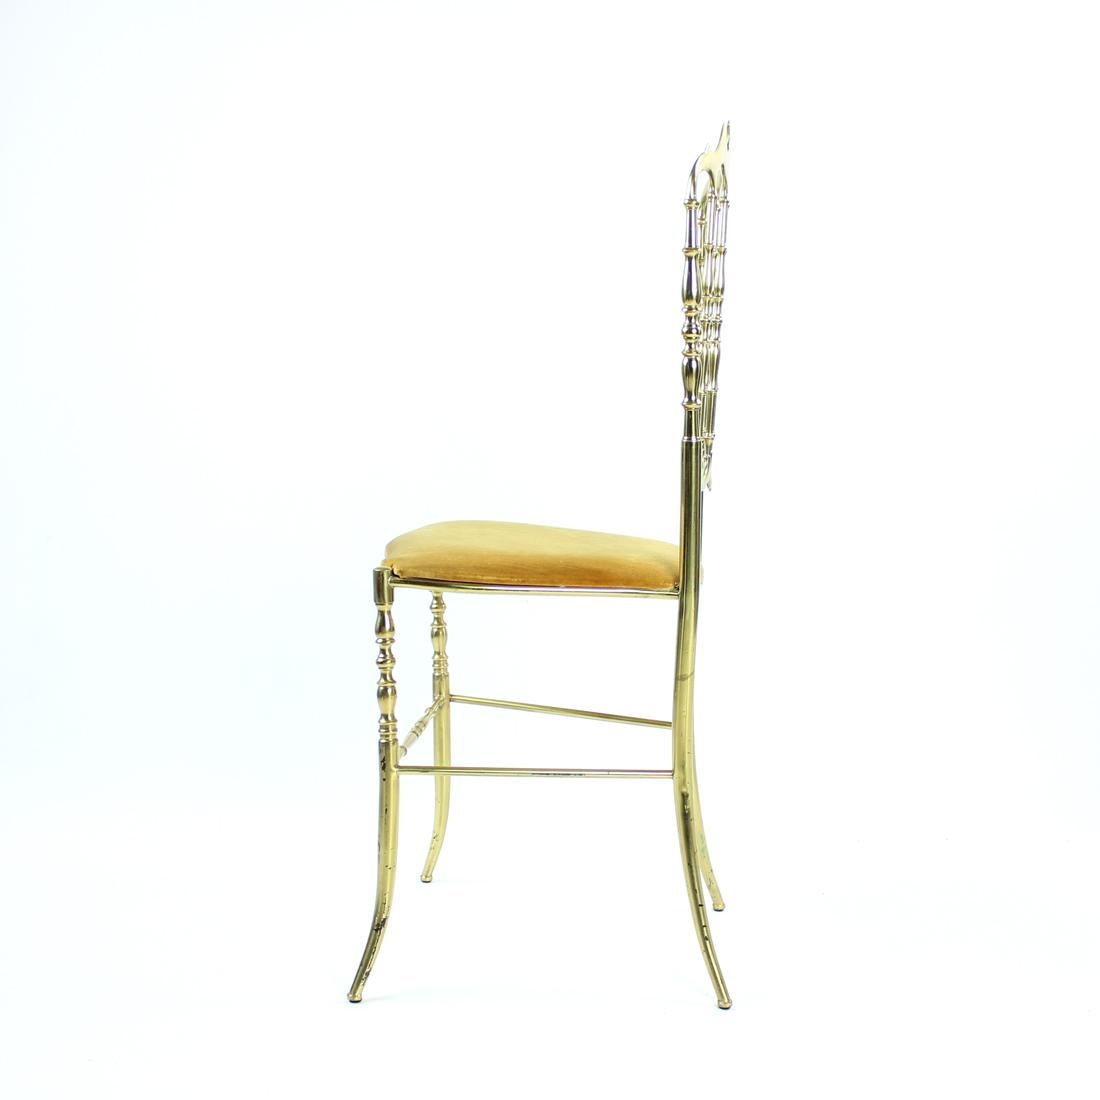 Mid-20th Century Mid Century Italian Brass Chair By Giuseppe Gaetano Descalzi For Chiavari, 1950s